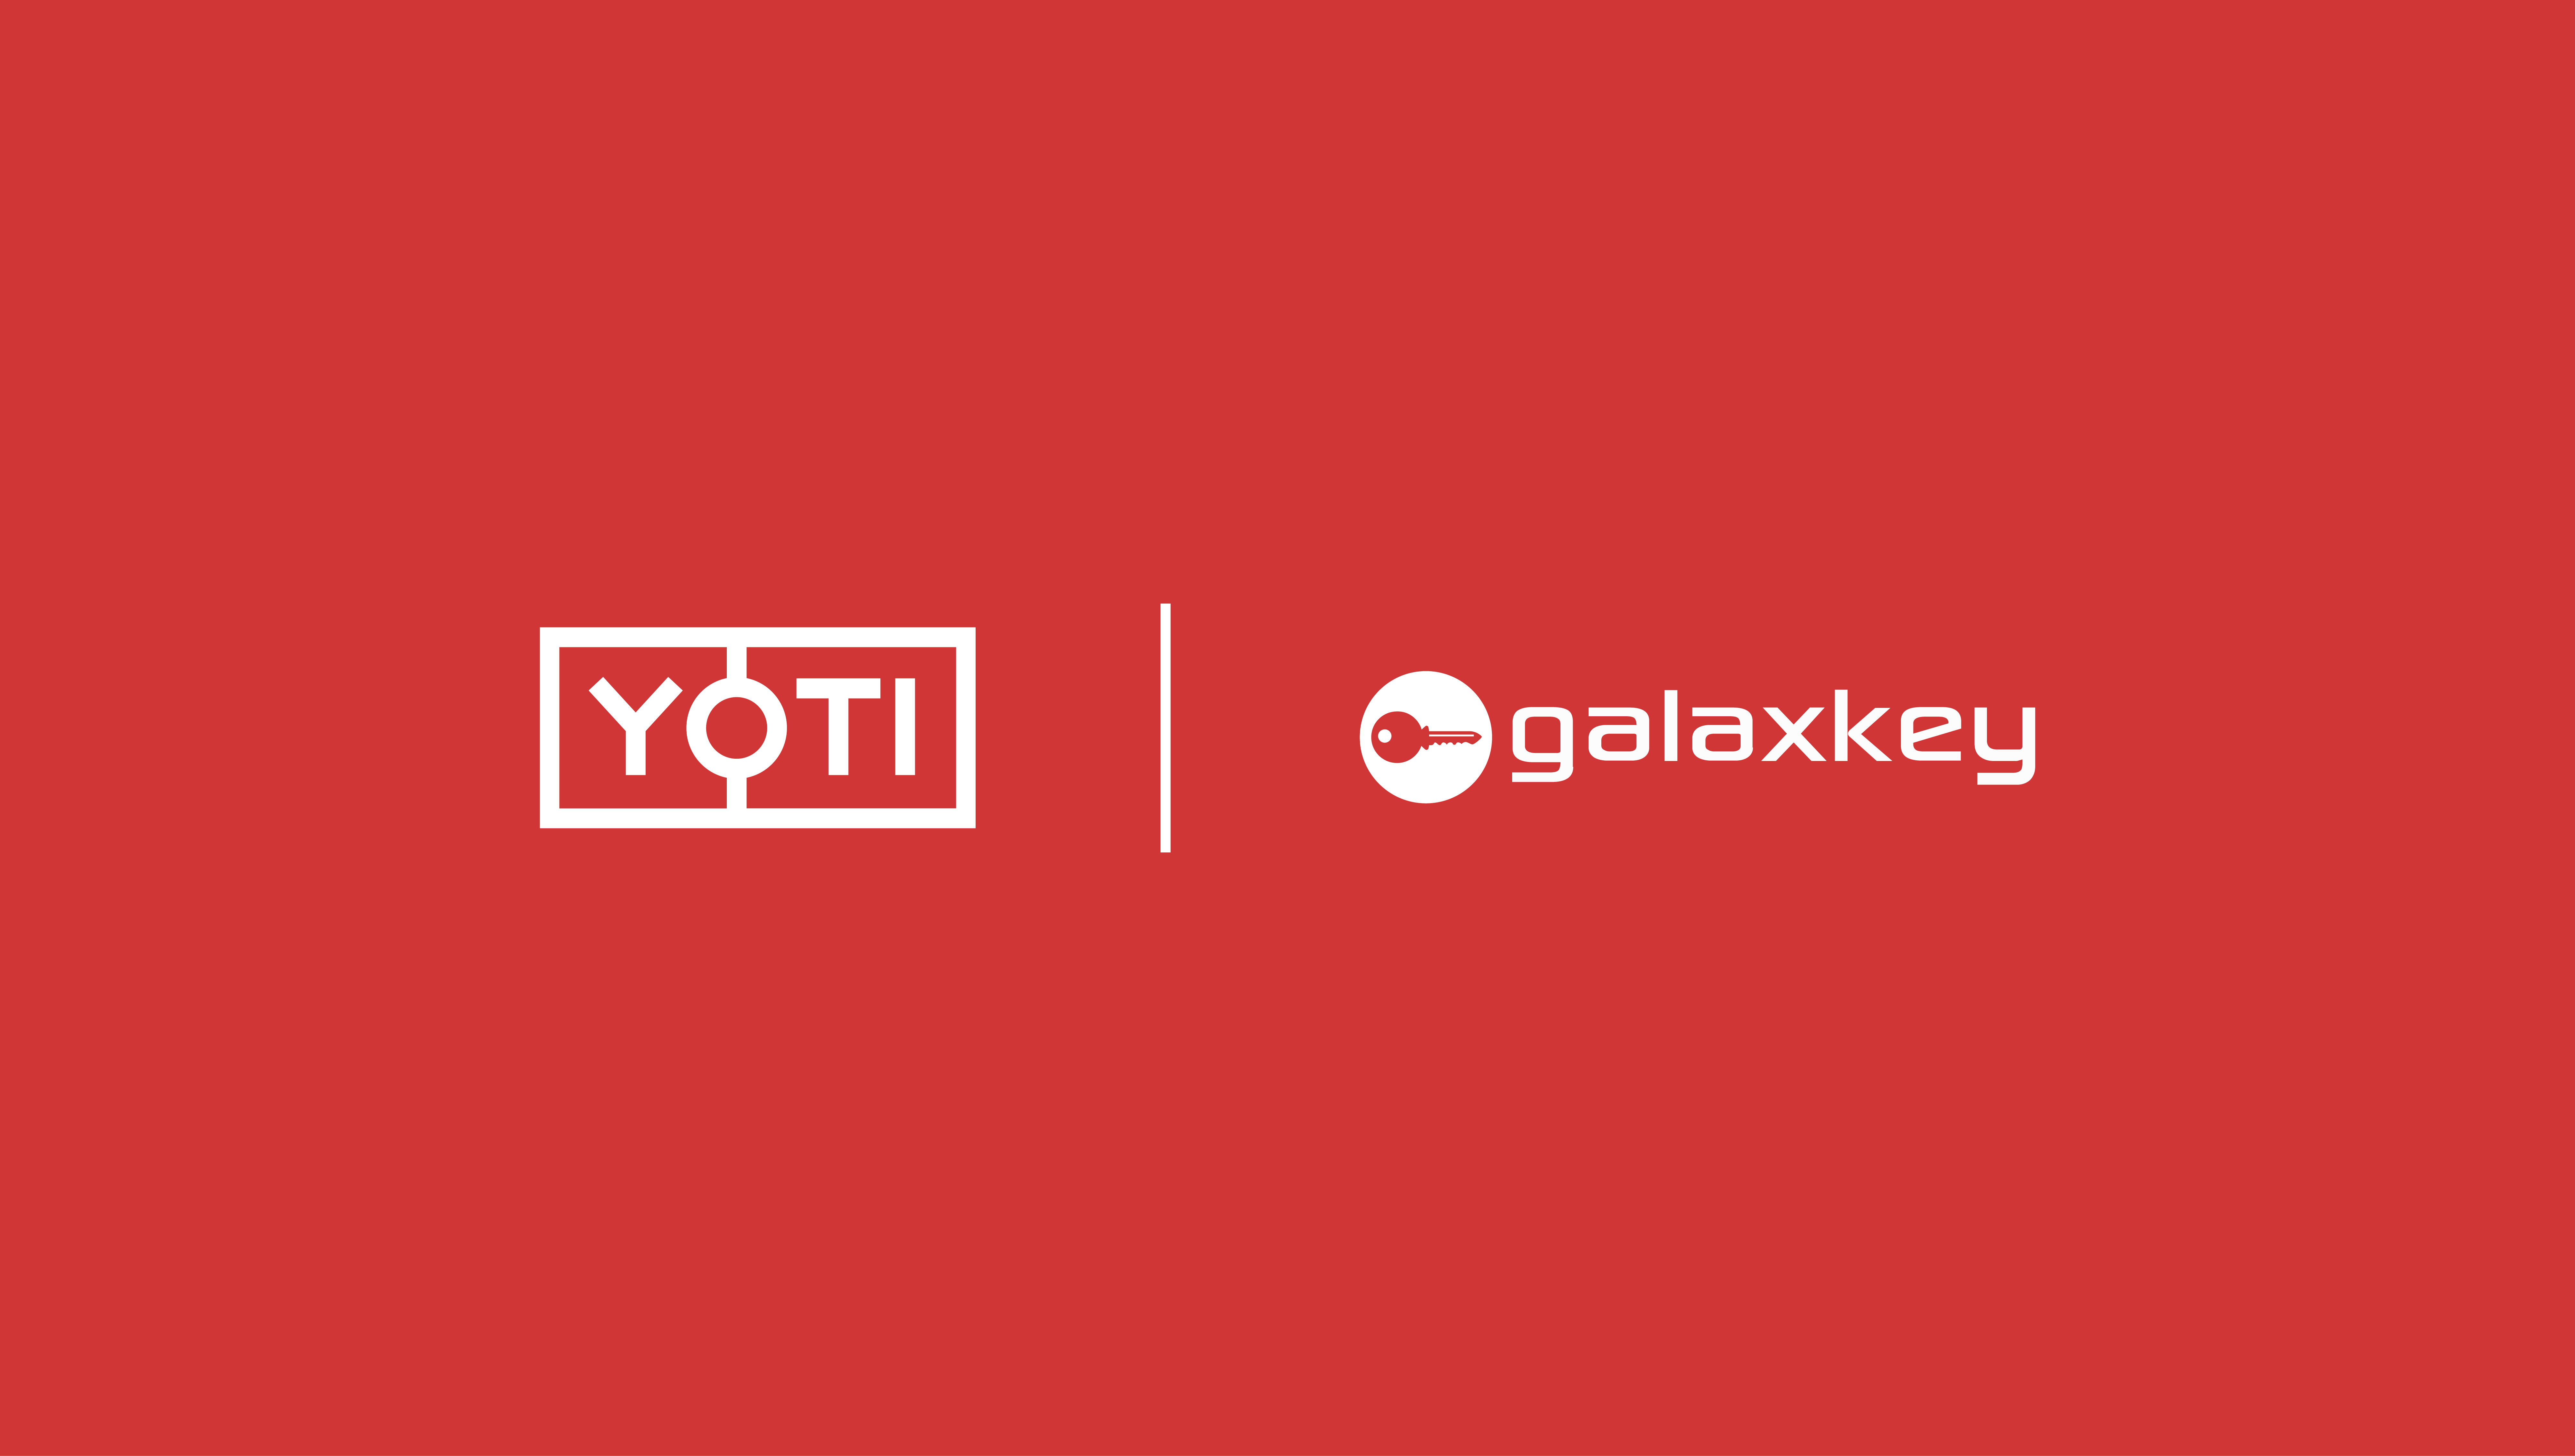 Yoti and galaxkey logos presented together